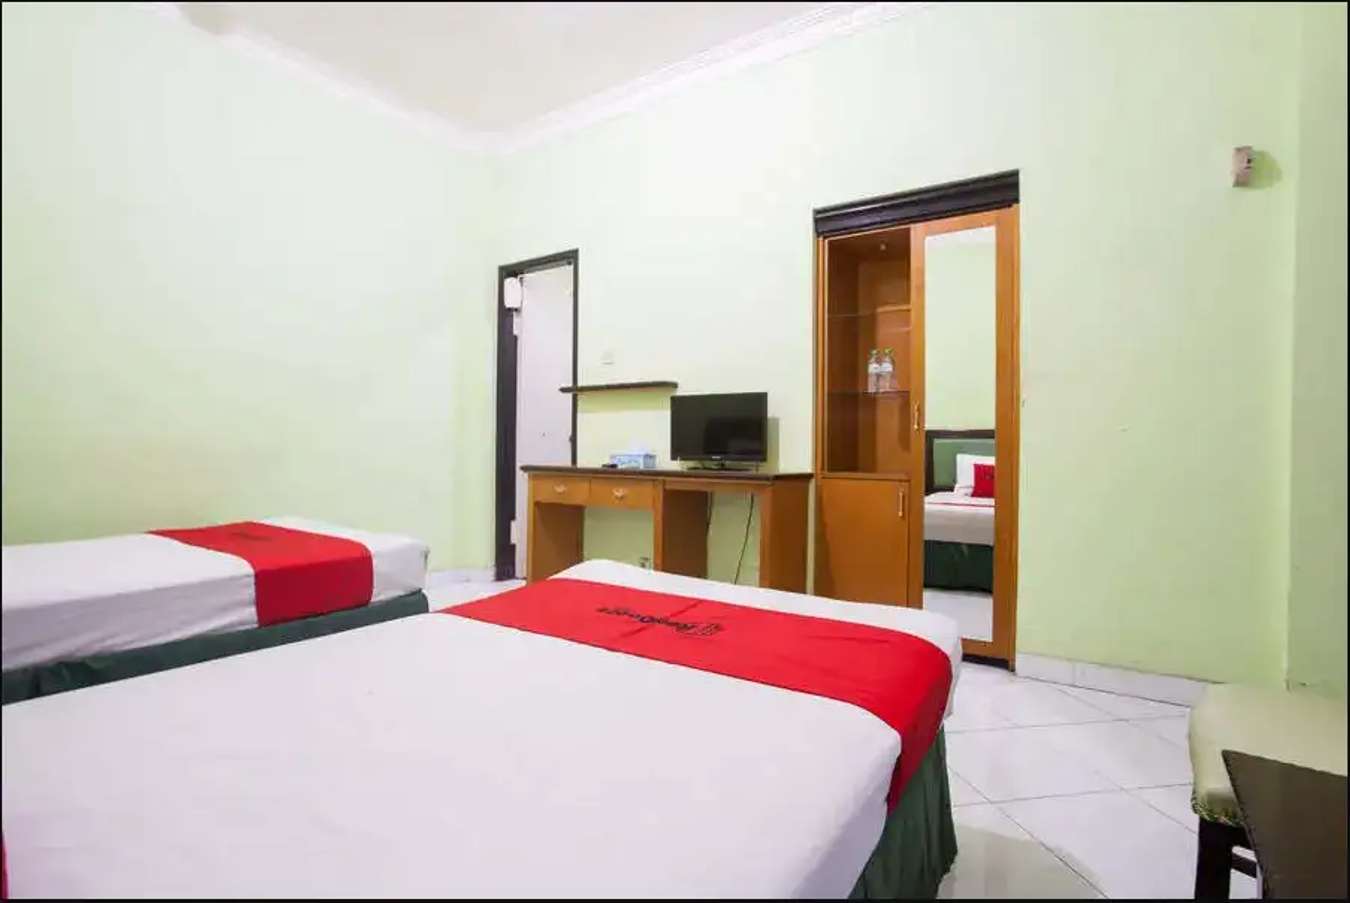 Bedroom - RedDoorz near Juanda International Airport